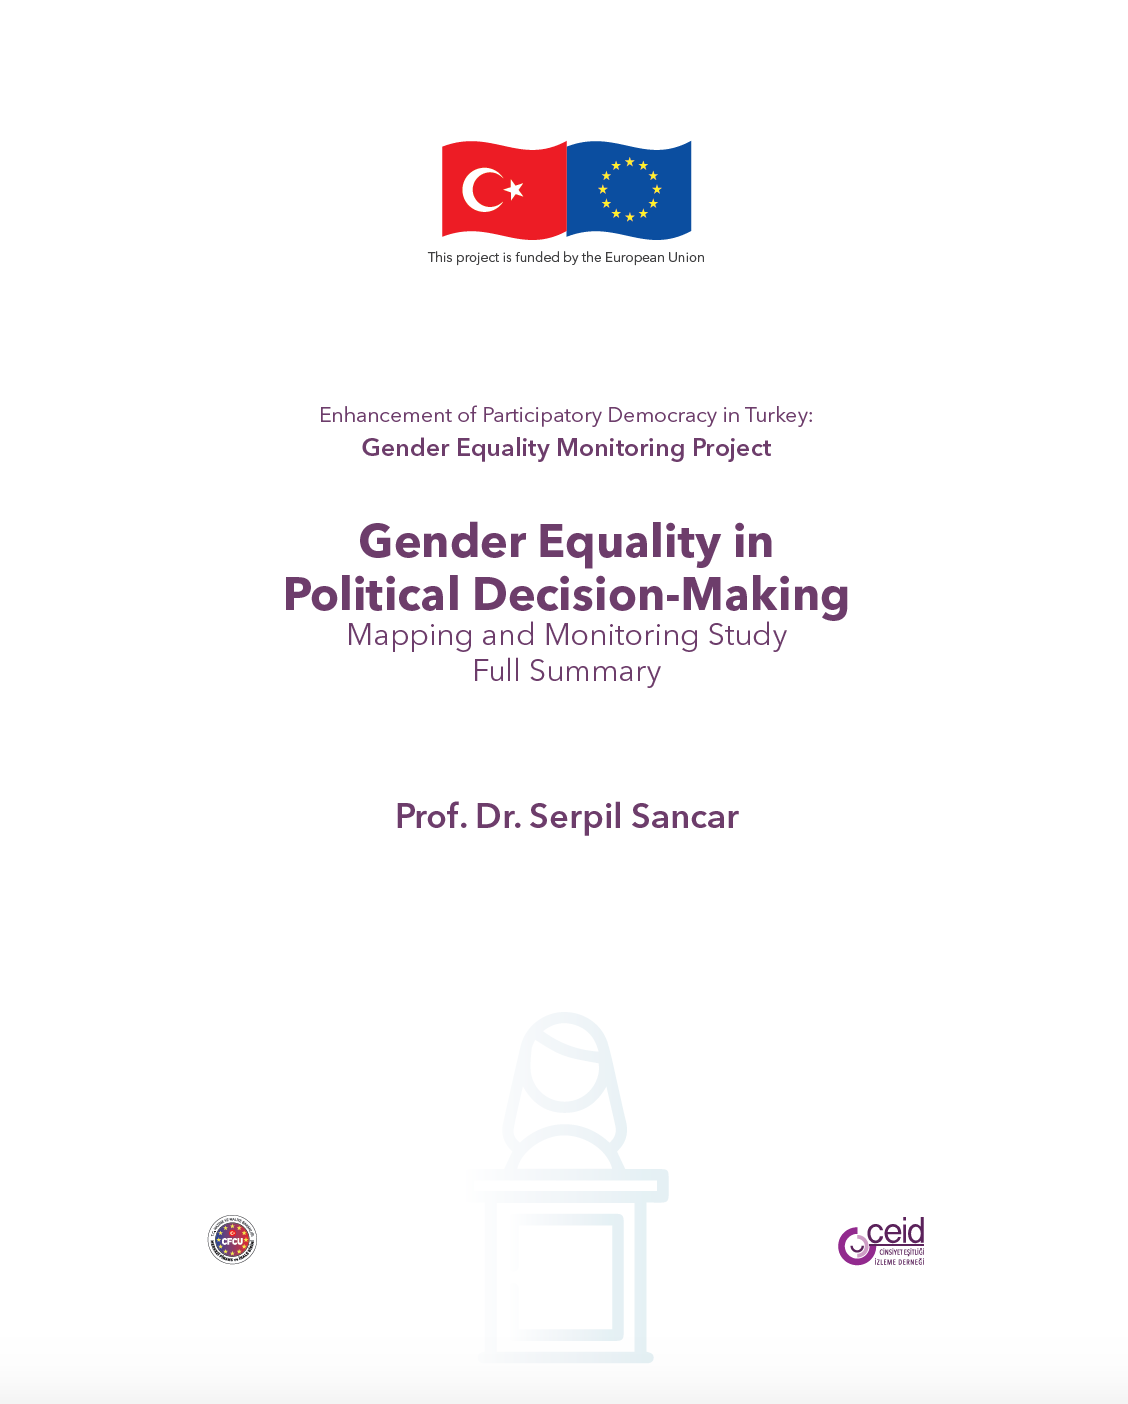 Gender Equality in Political Decision-Making